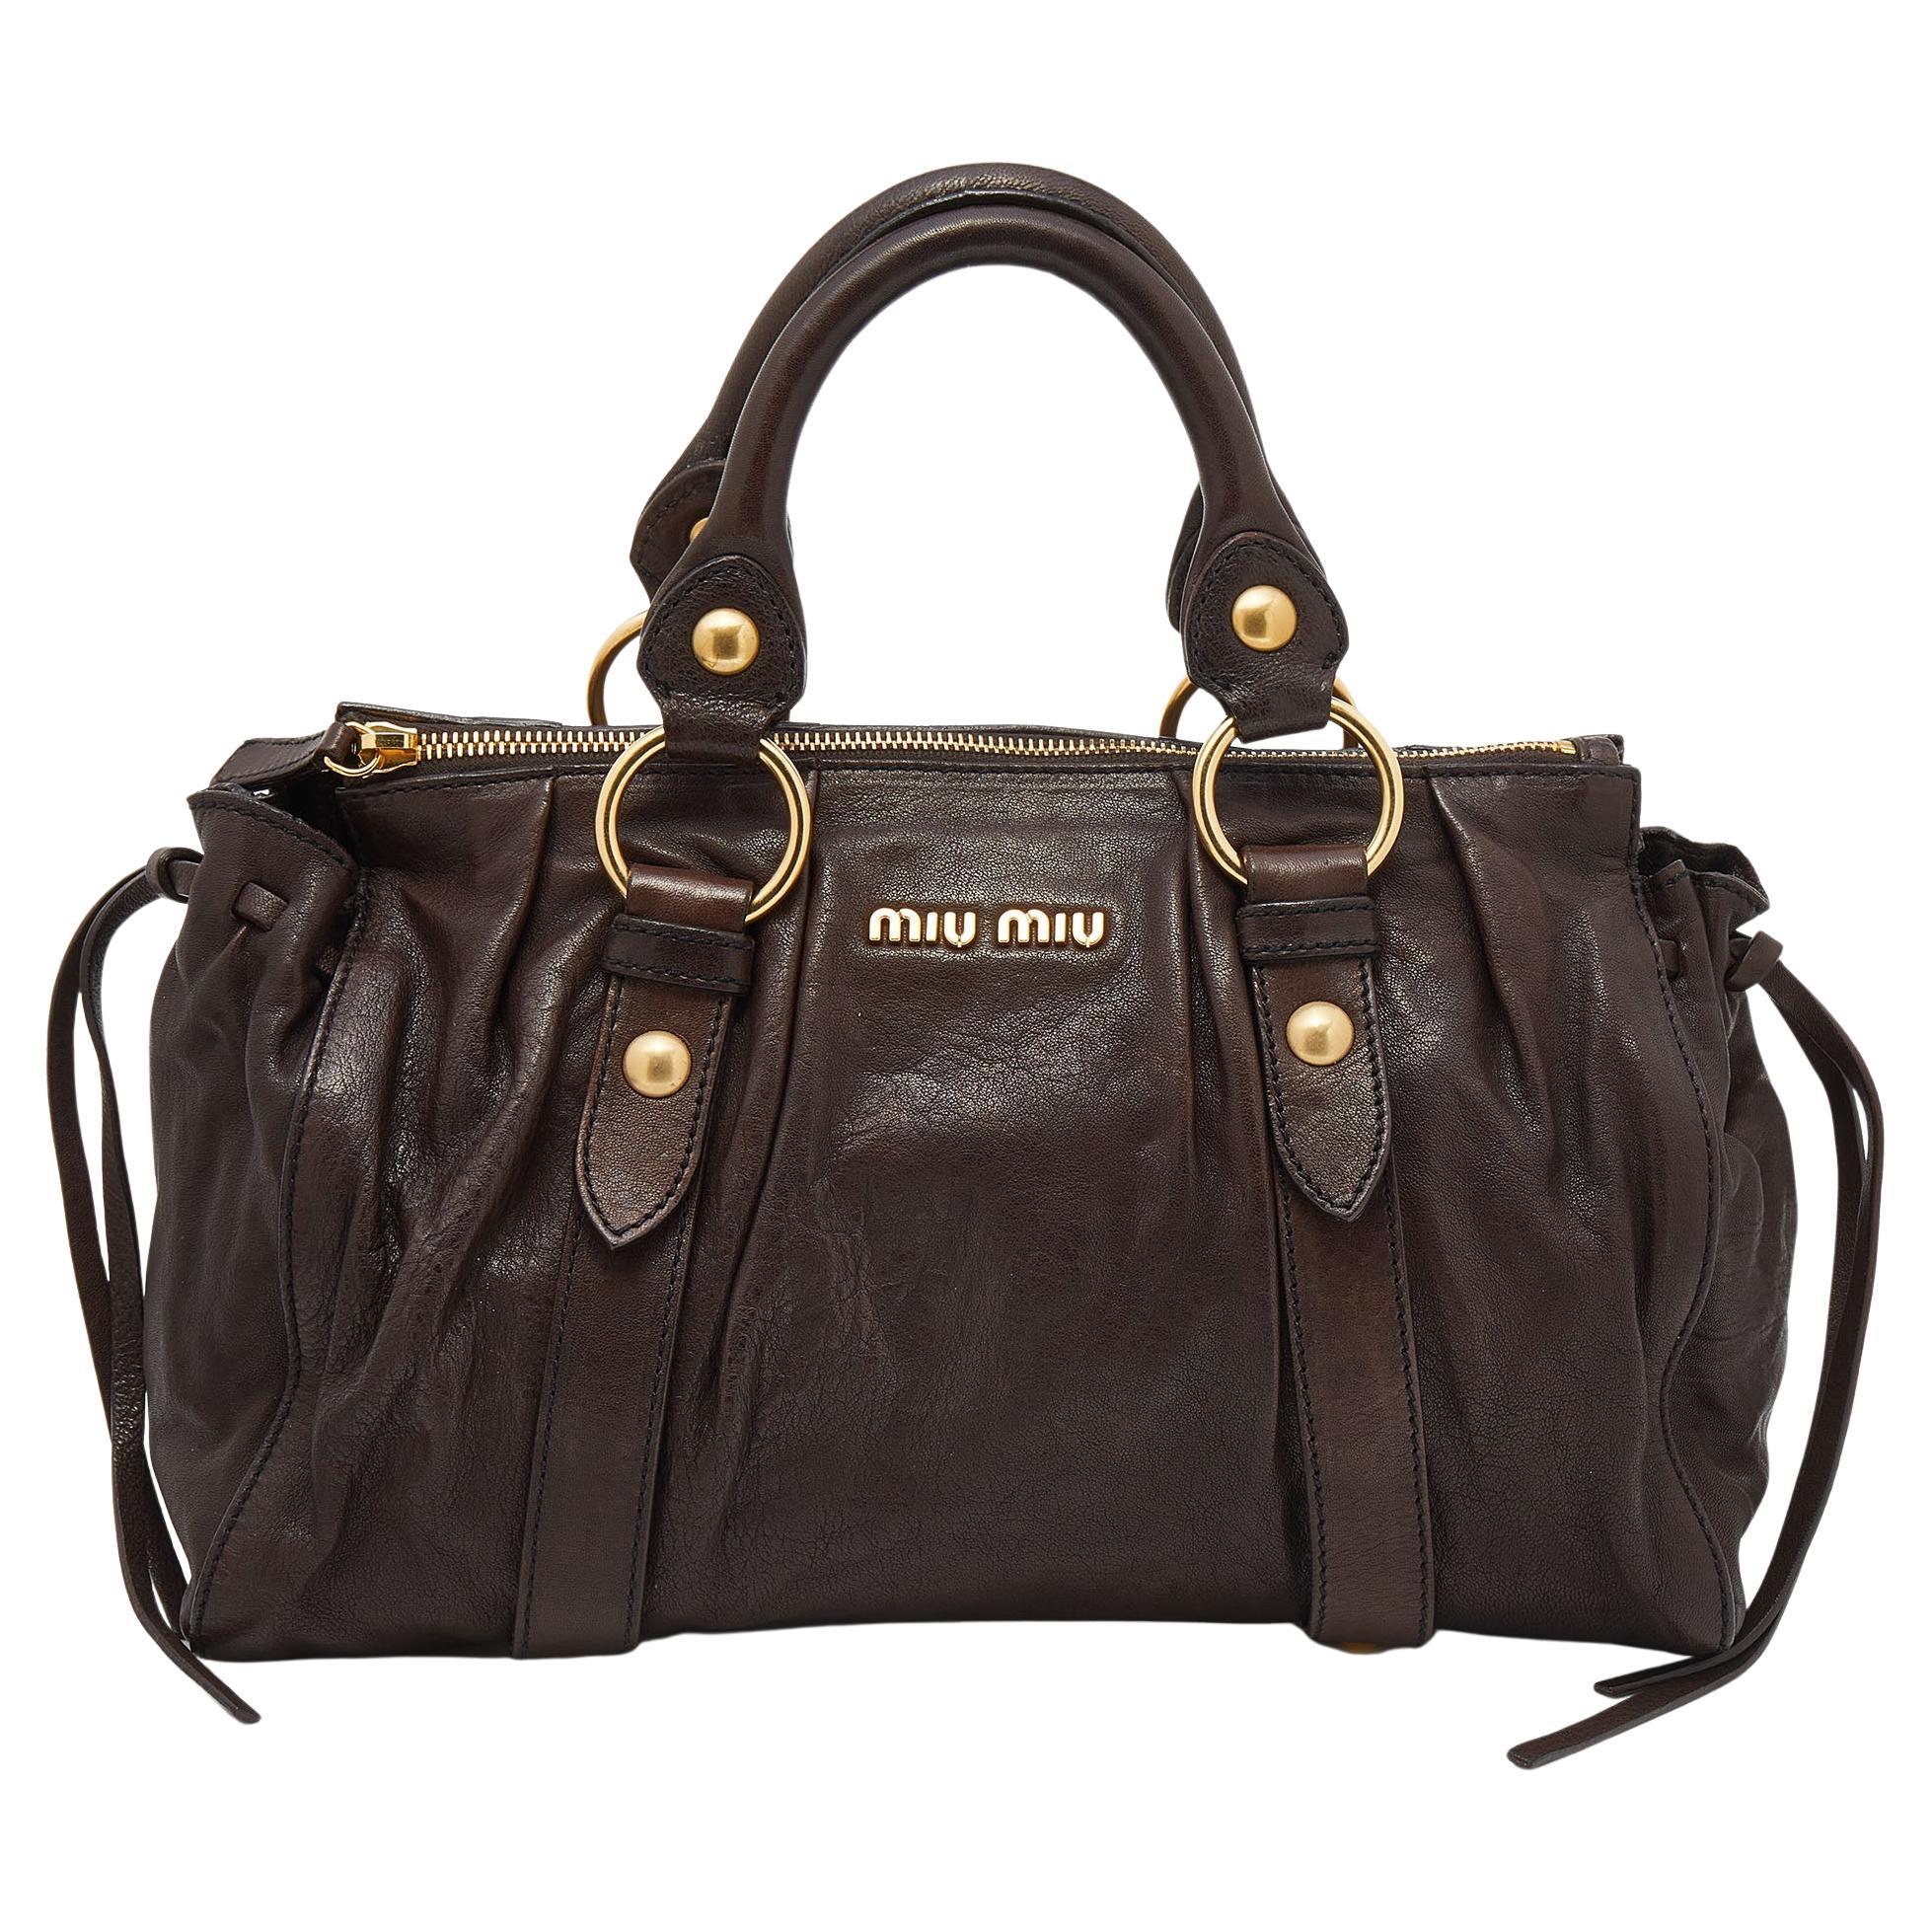 Miu Miu Vitello Lux Bow Brown Leather Handbag Purse